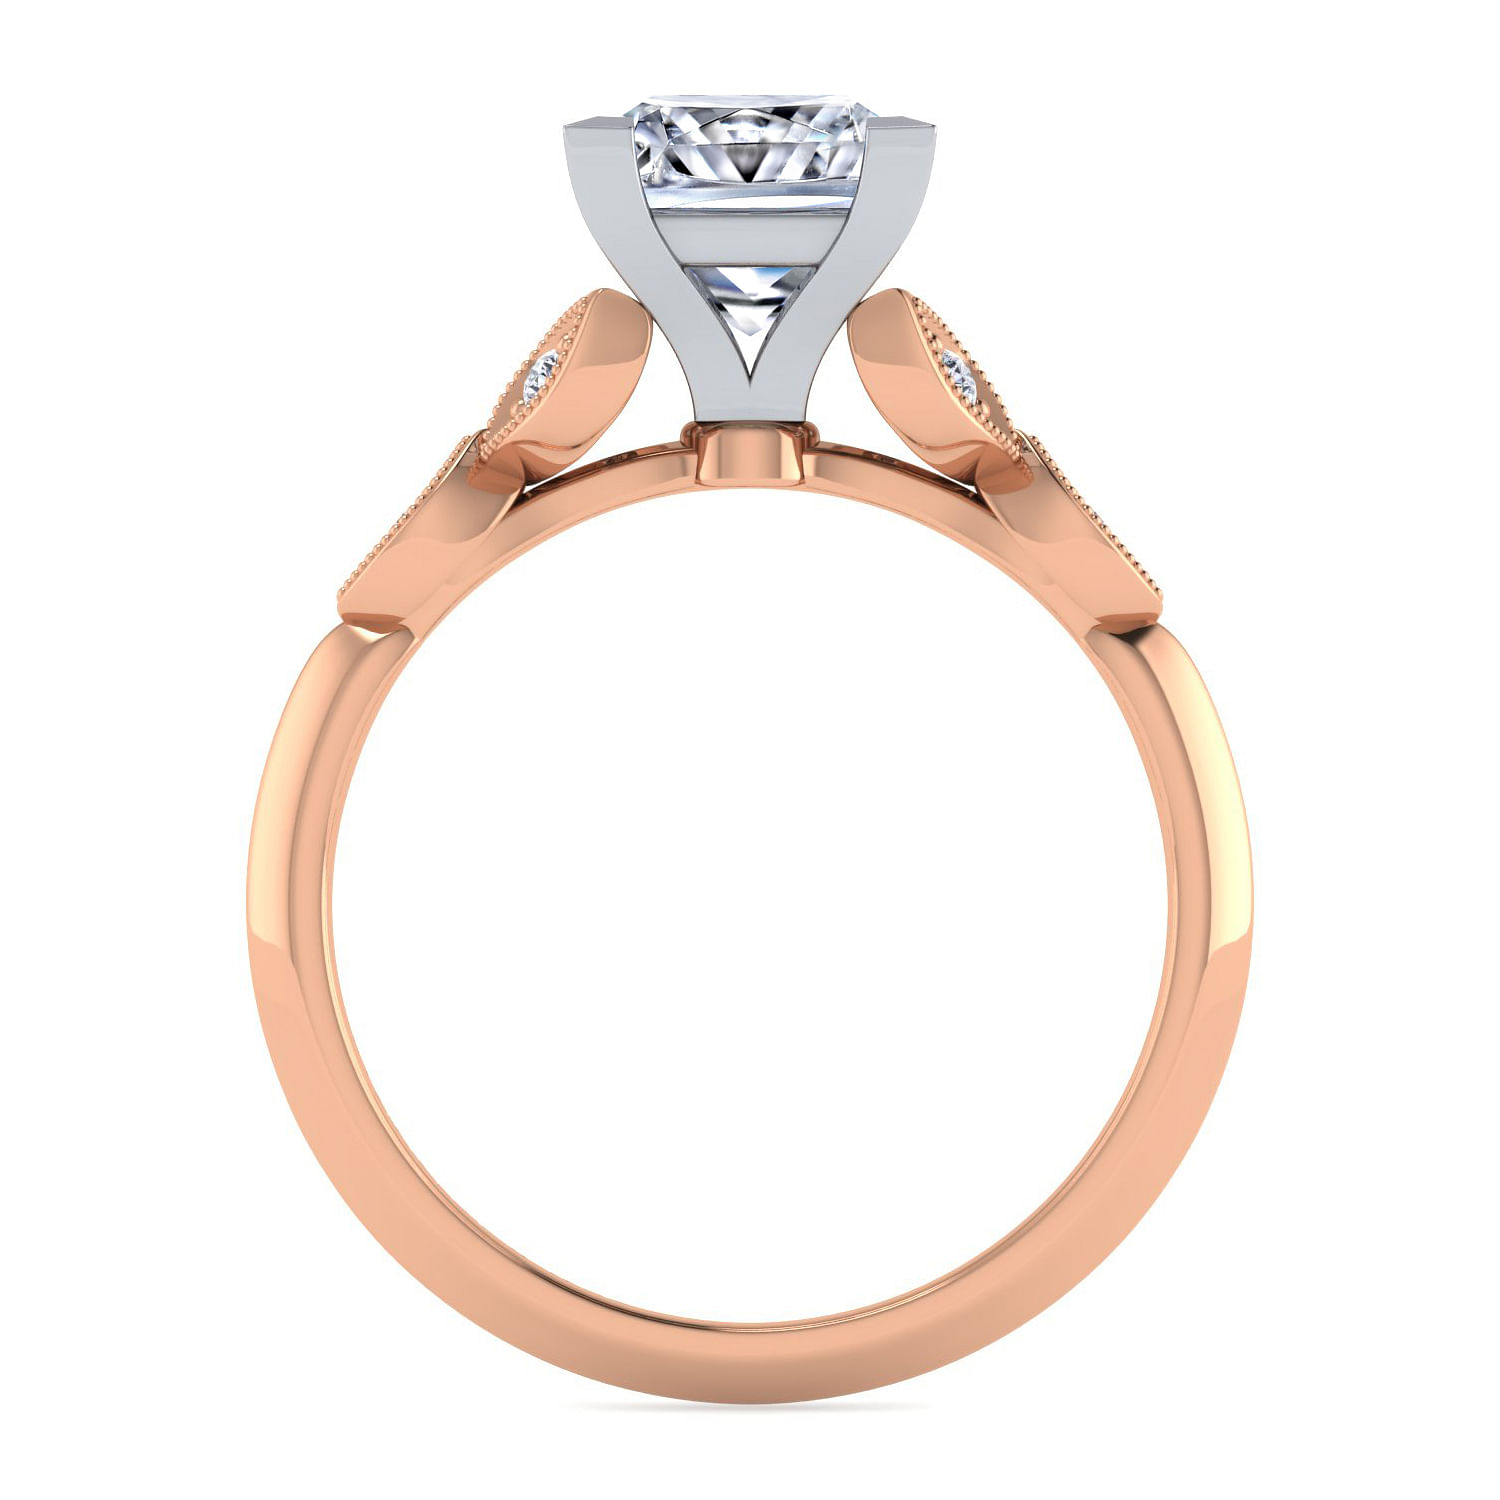 Vintage Inspired 14K White-Rose Gold Split Shank Princess Cut Diamond Engagement Ring